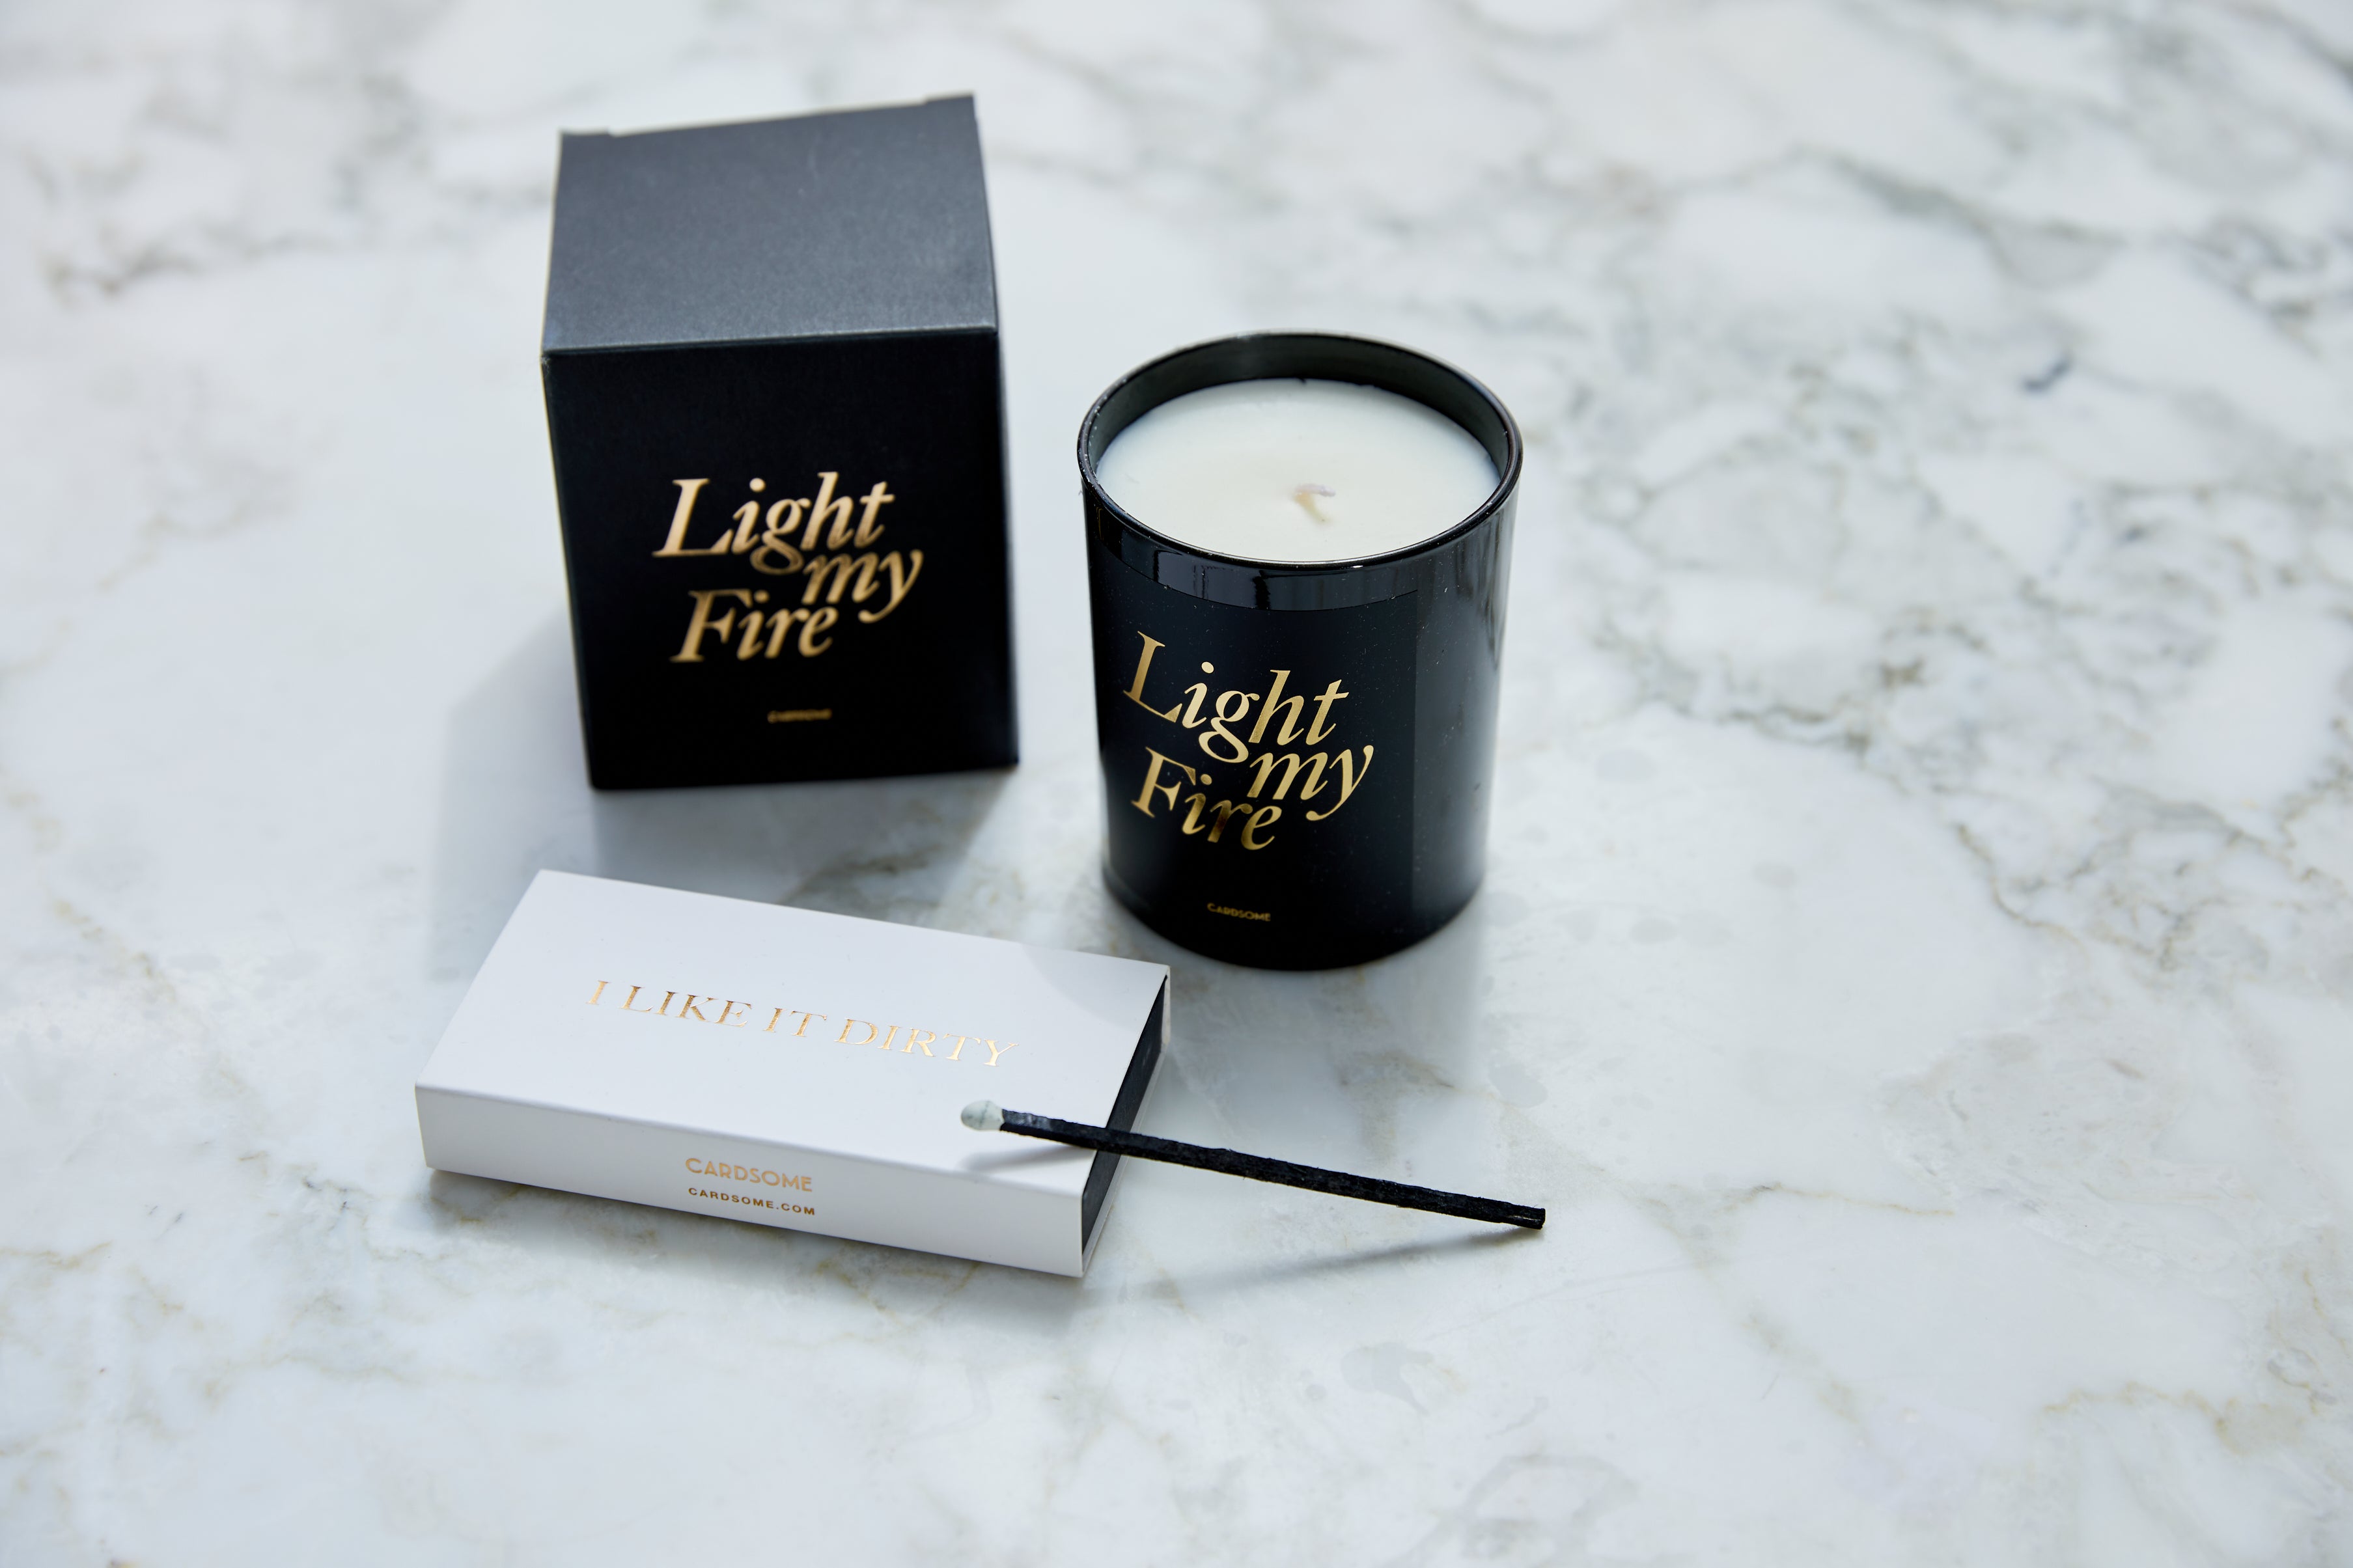 “How I like it” Candle & Match Gift Bundle